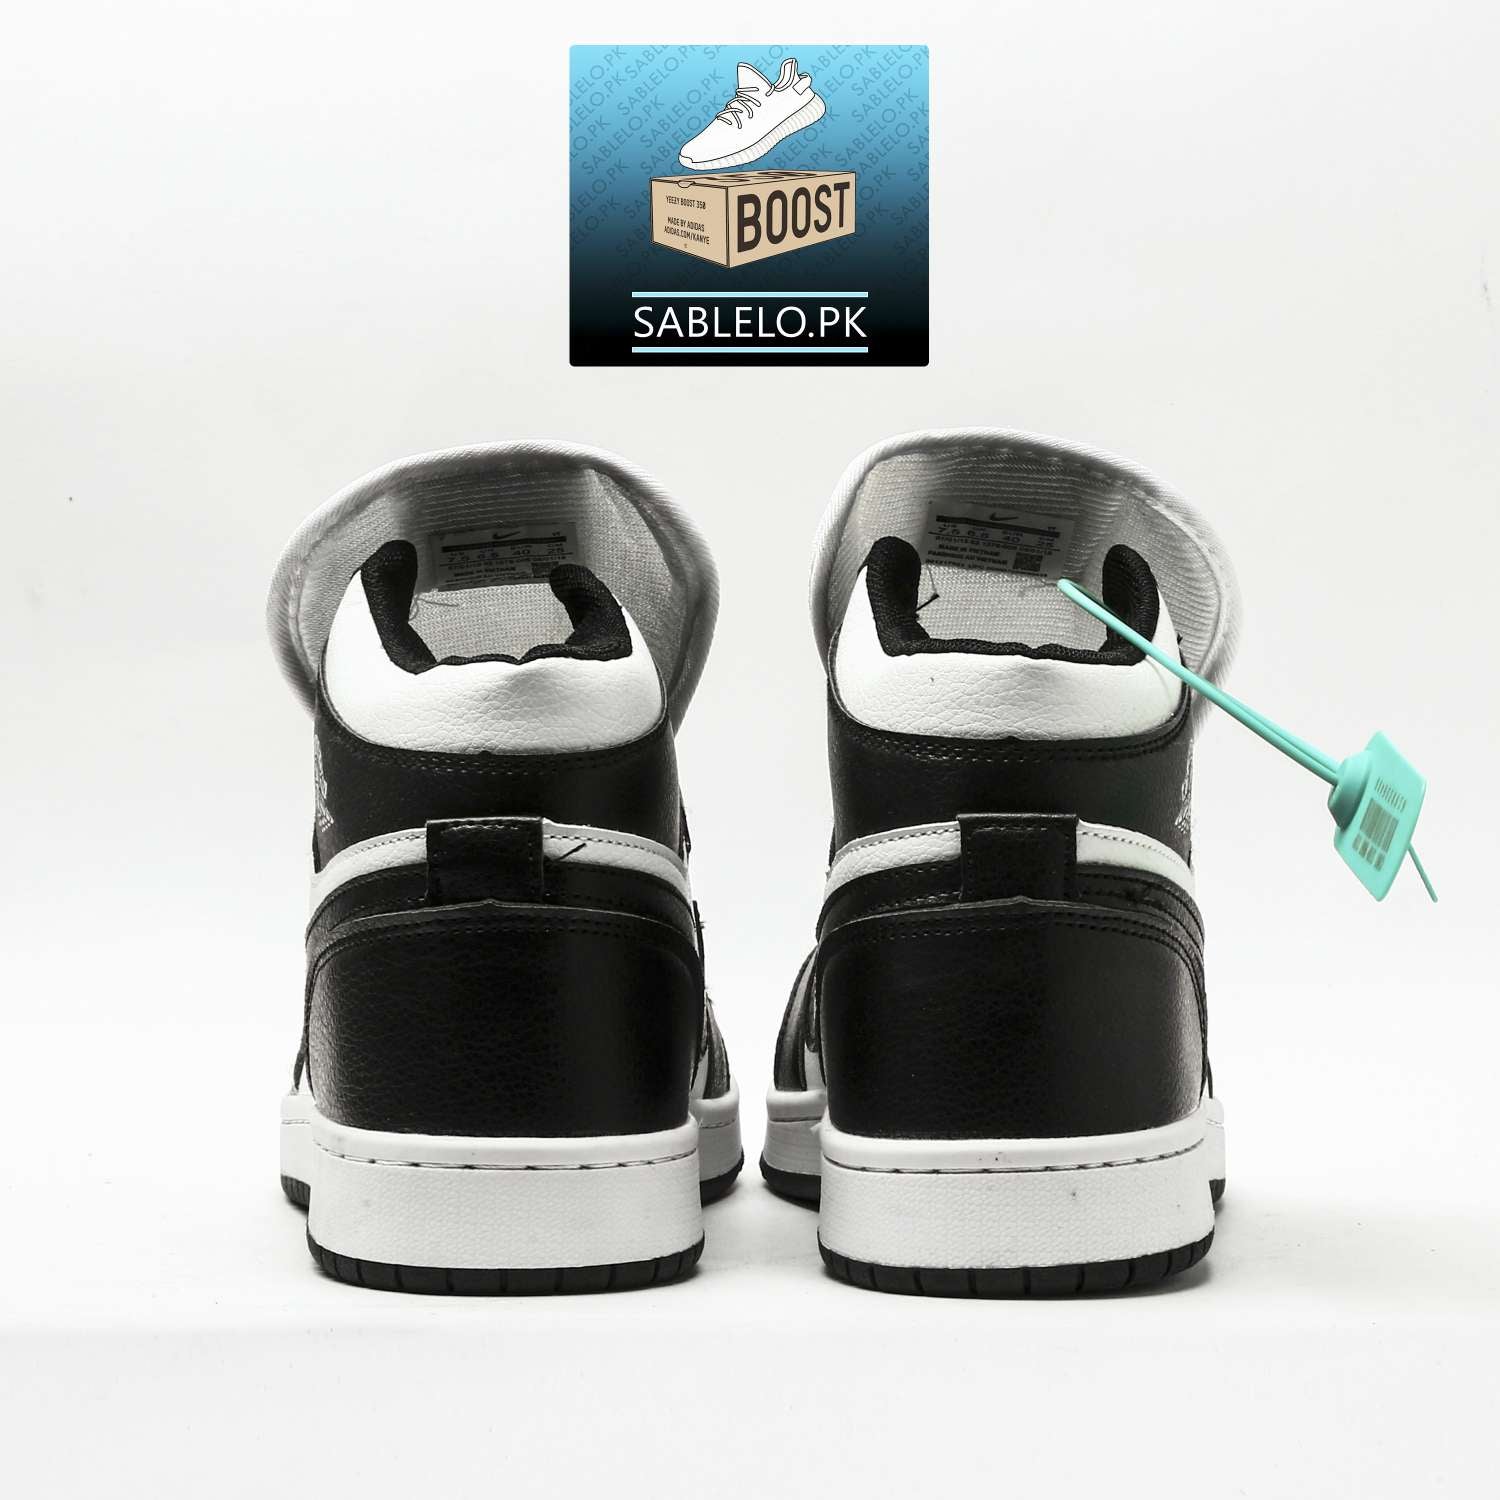 Jordan 1 High Top Black White - Premium Shoes from Sablelo.pk - Just Rs.5499! Shop now at Sablelo.pk